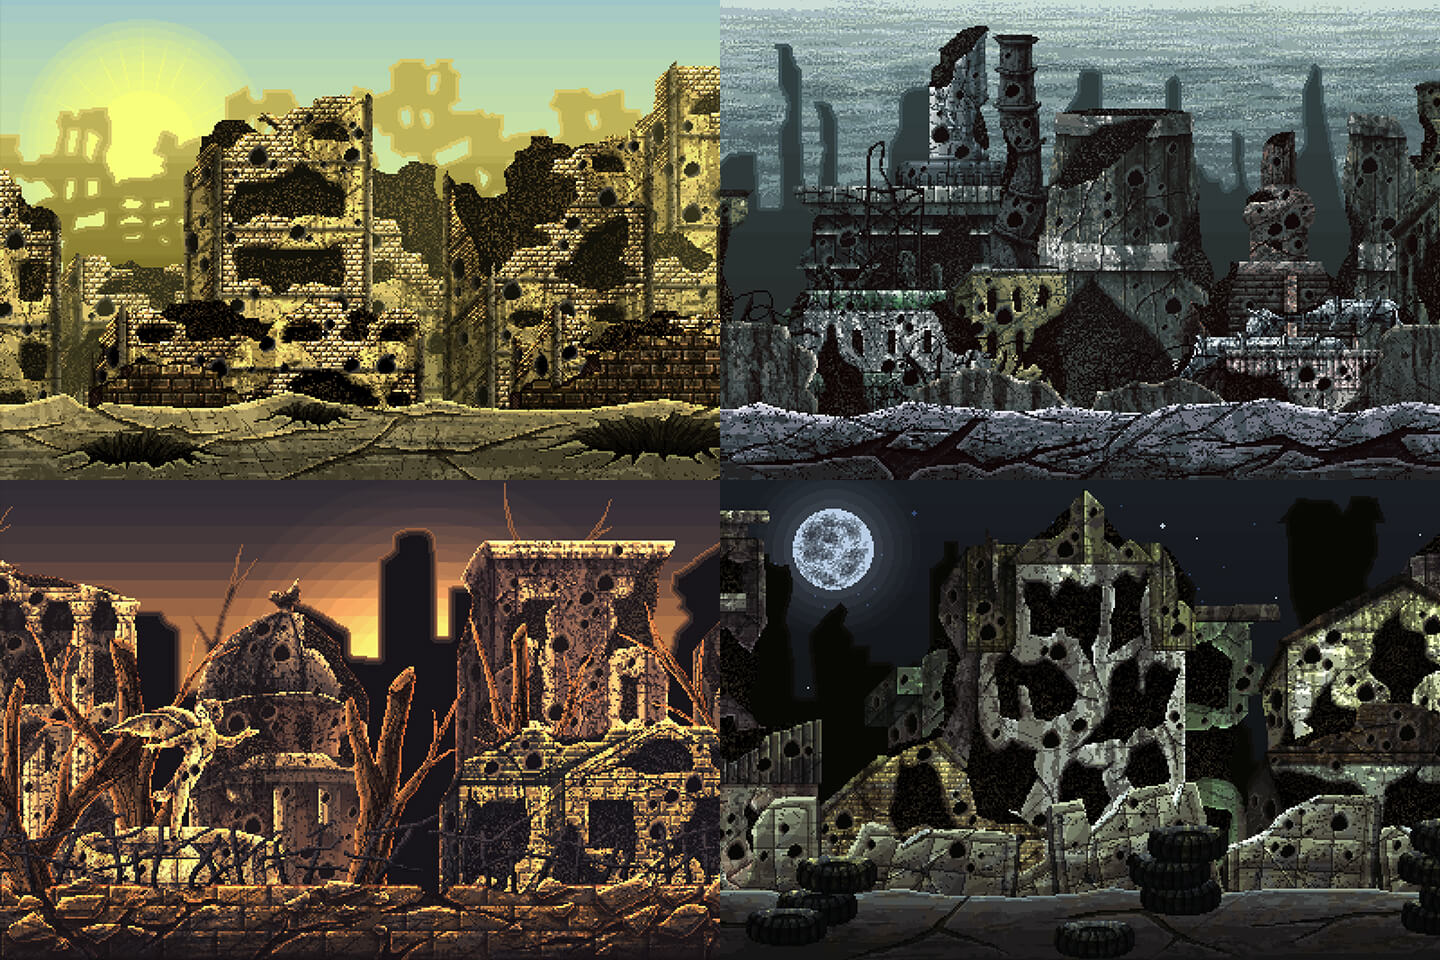 Battle Backgrounds Pixel Art, Game Assets